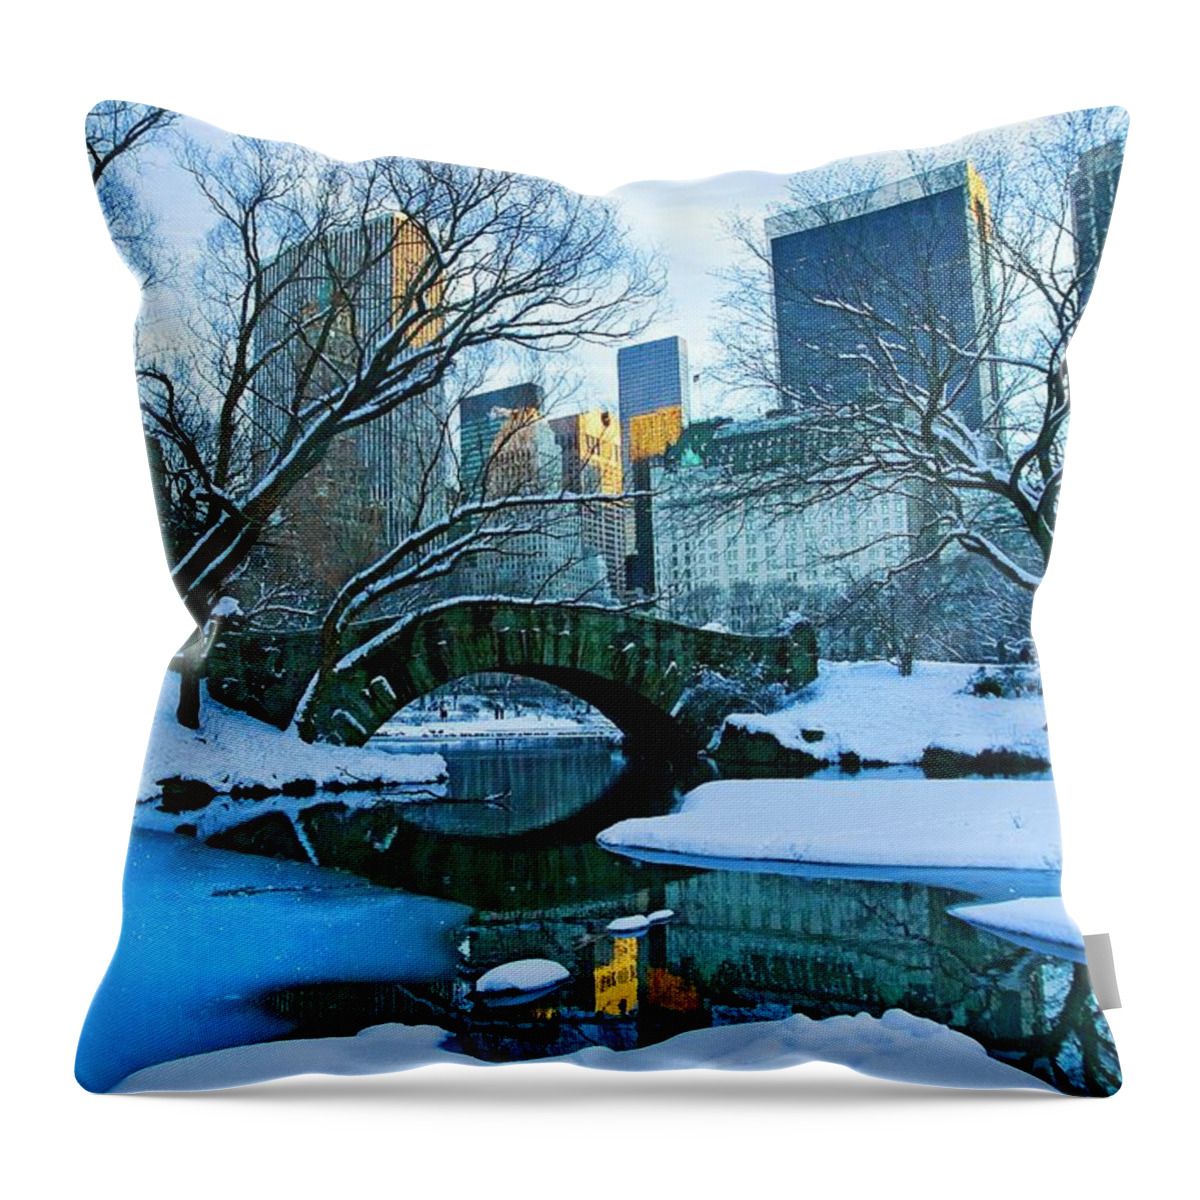 Estock Throw Pillow featuring the digital art Pond & Bridge, Central Park, Nyc by Claudia Uripos